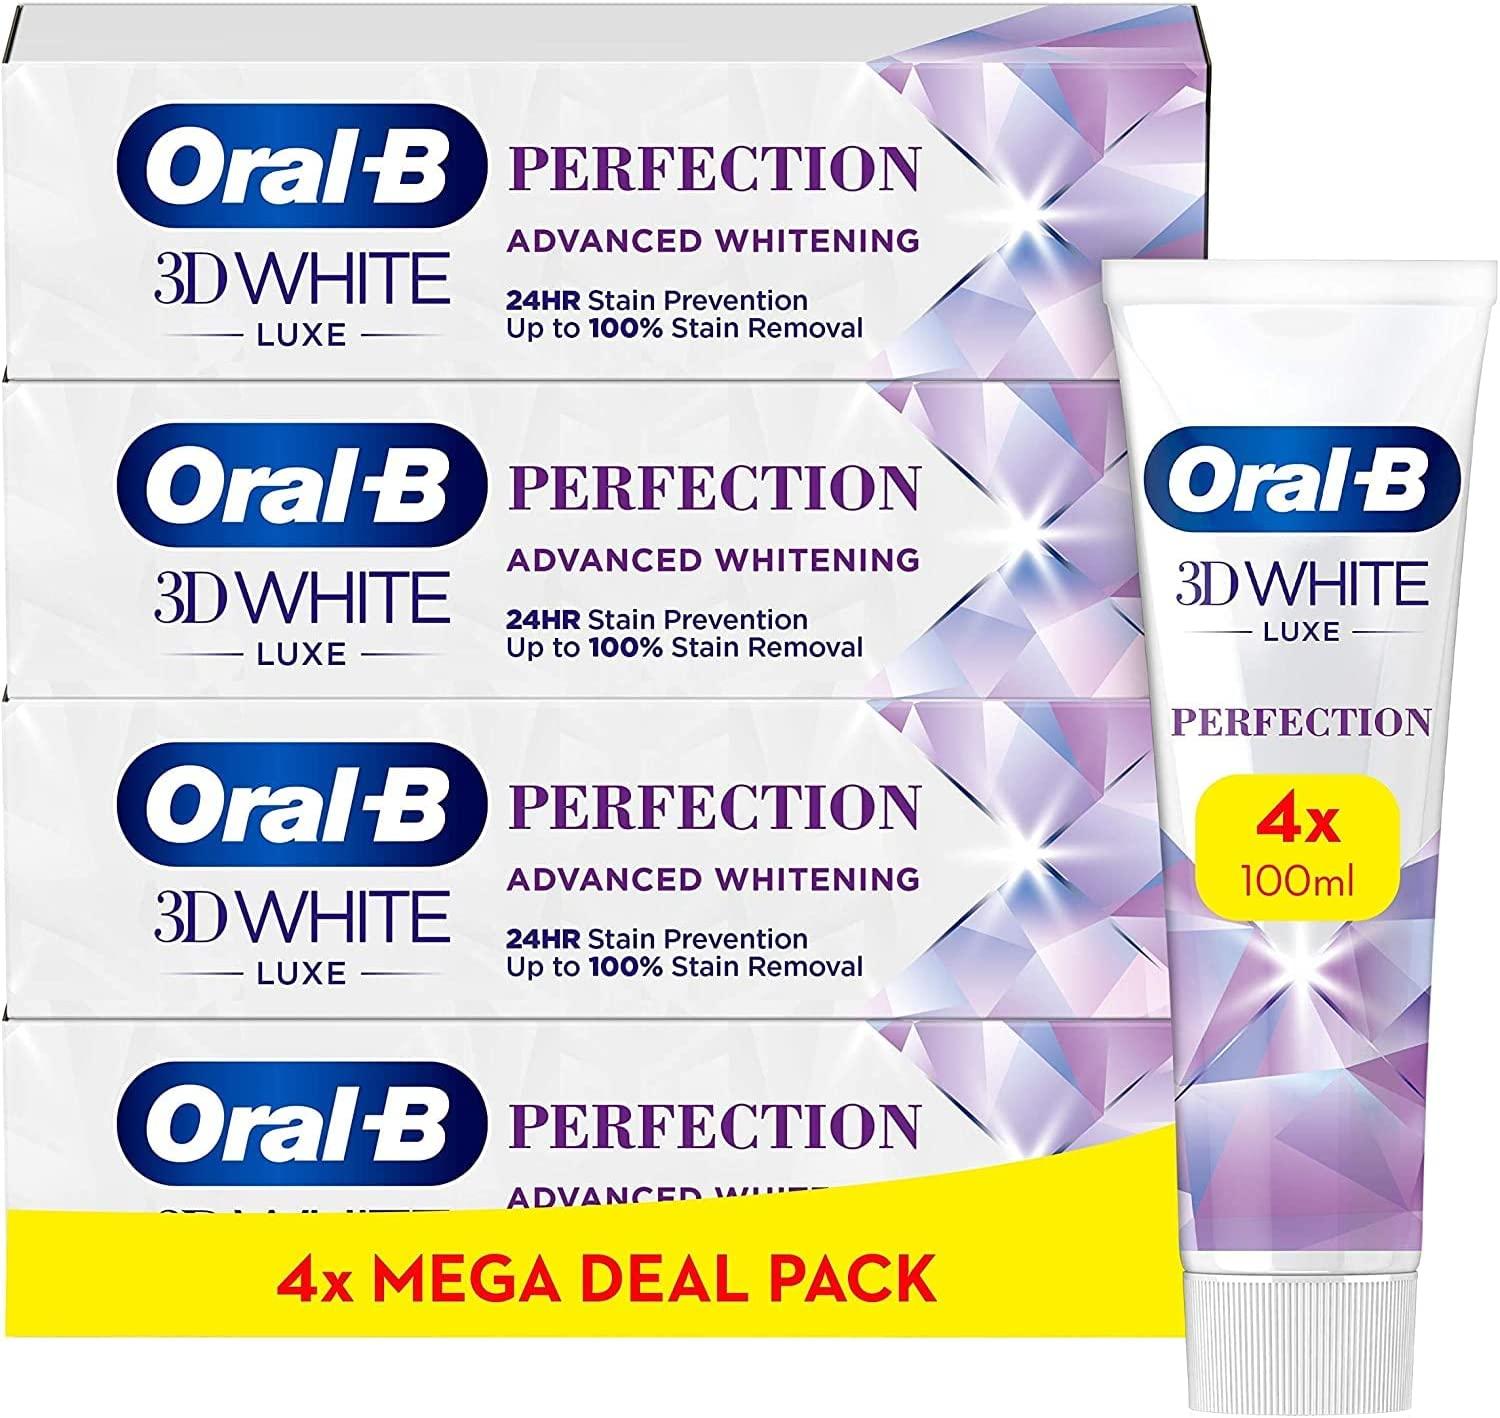 Oral-B 3D White Luxe Perfection Advanced Whitening Toothpaste, 400 ml (100 ml x 4)